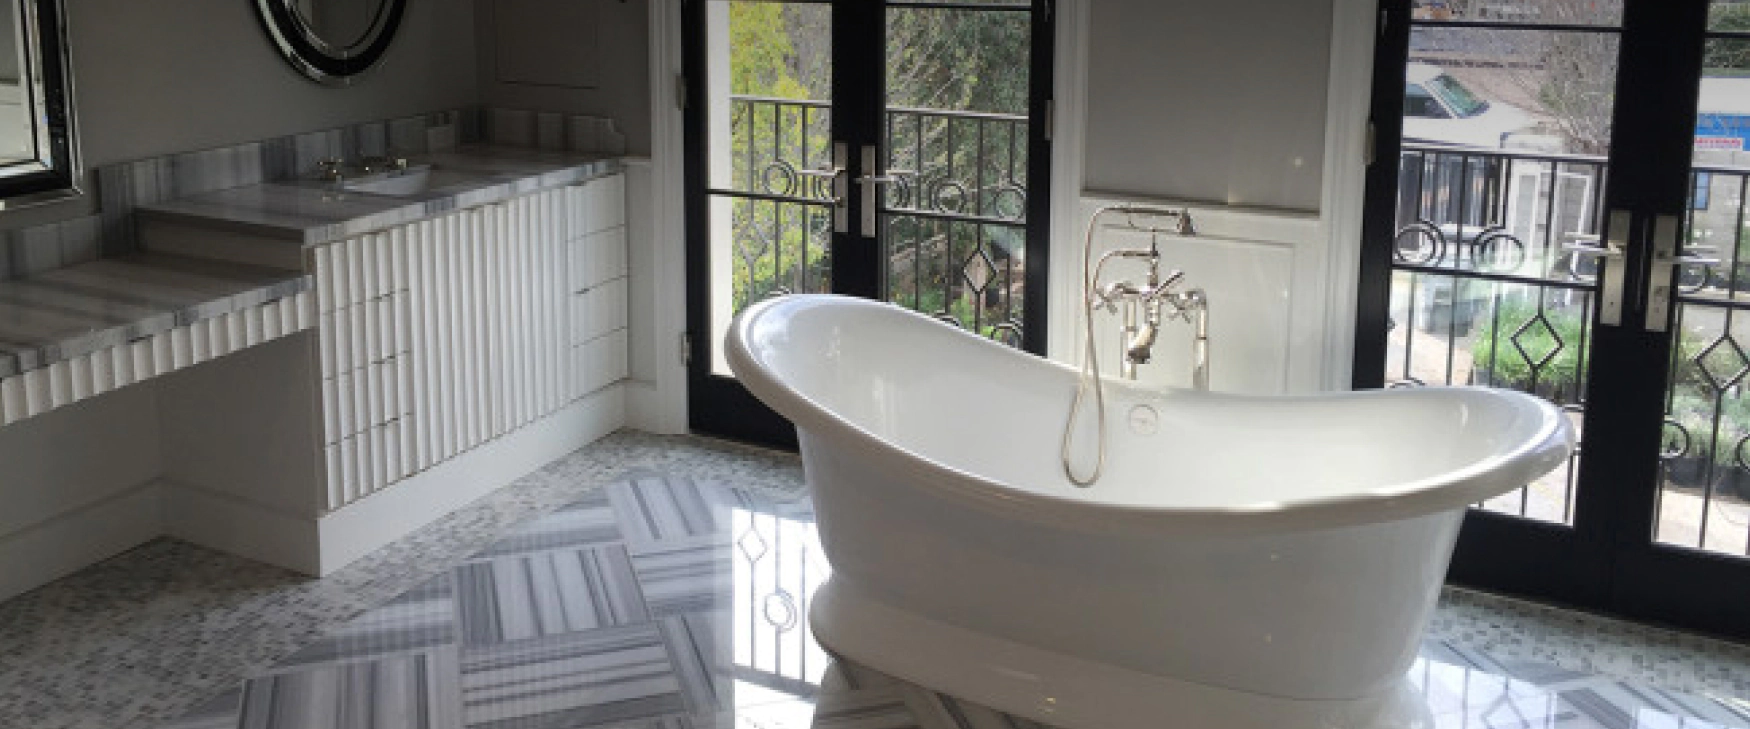 bathtub in a residential house